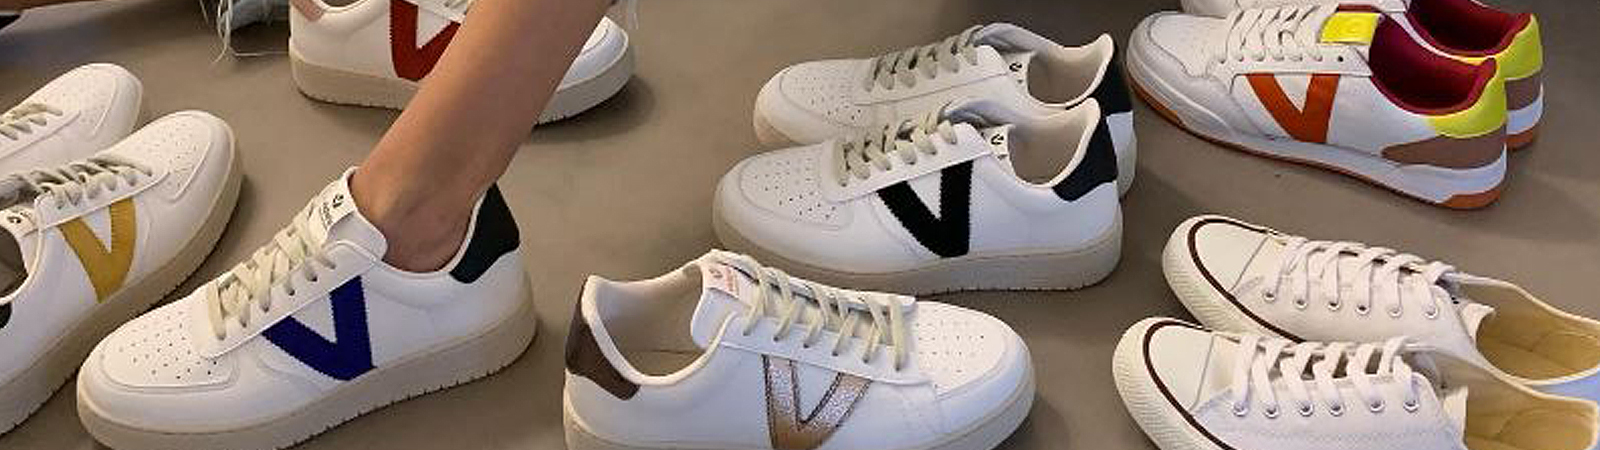 chaussure victoria;shoes victoria